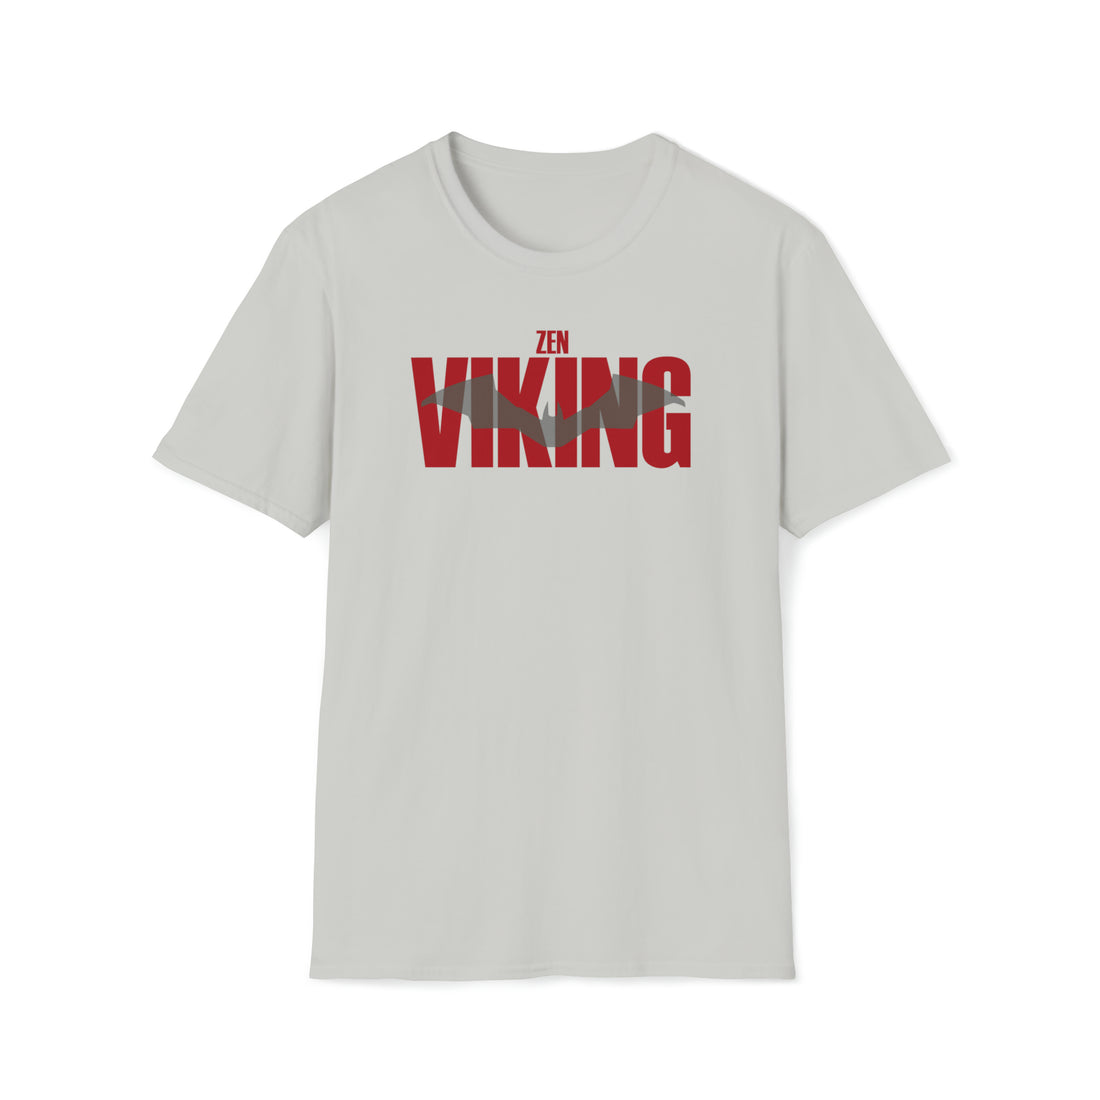 ZV Vikingbat T-Shirt - THE ZEN VIKING